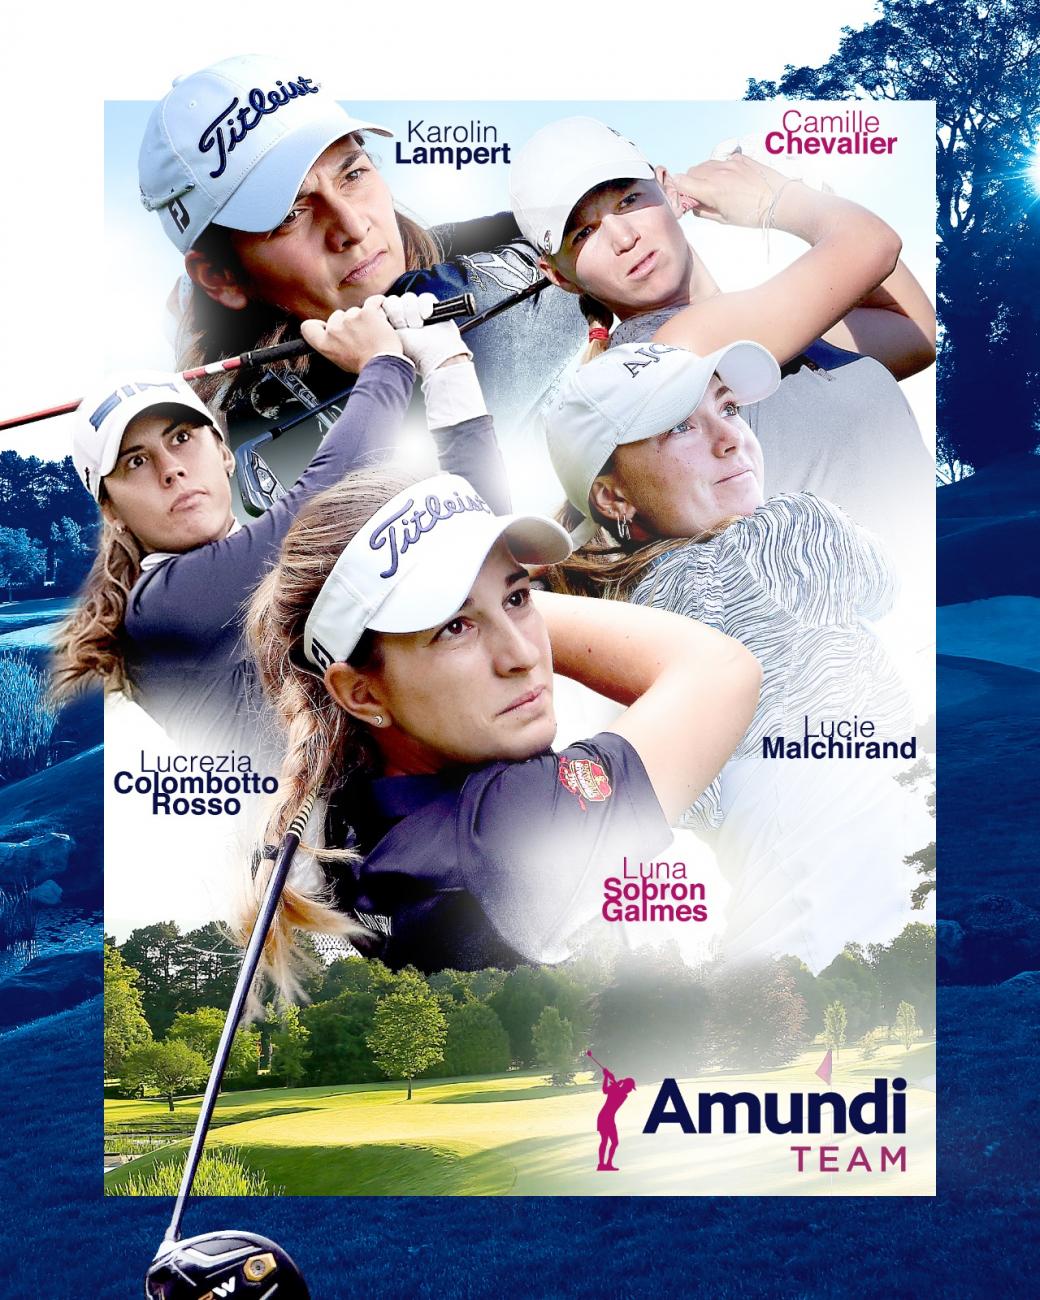 Corporate - Golf - Amundi Team - Key visual